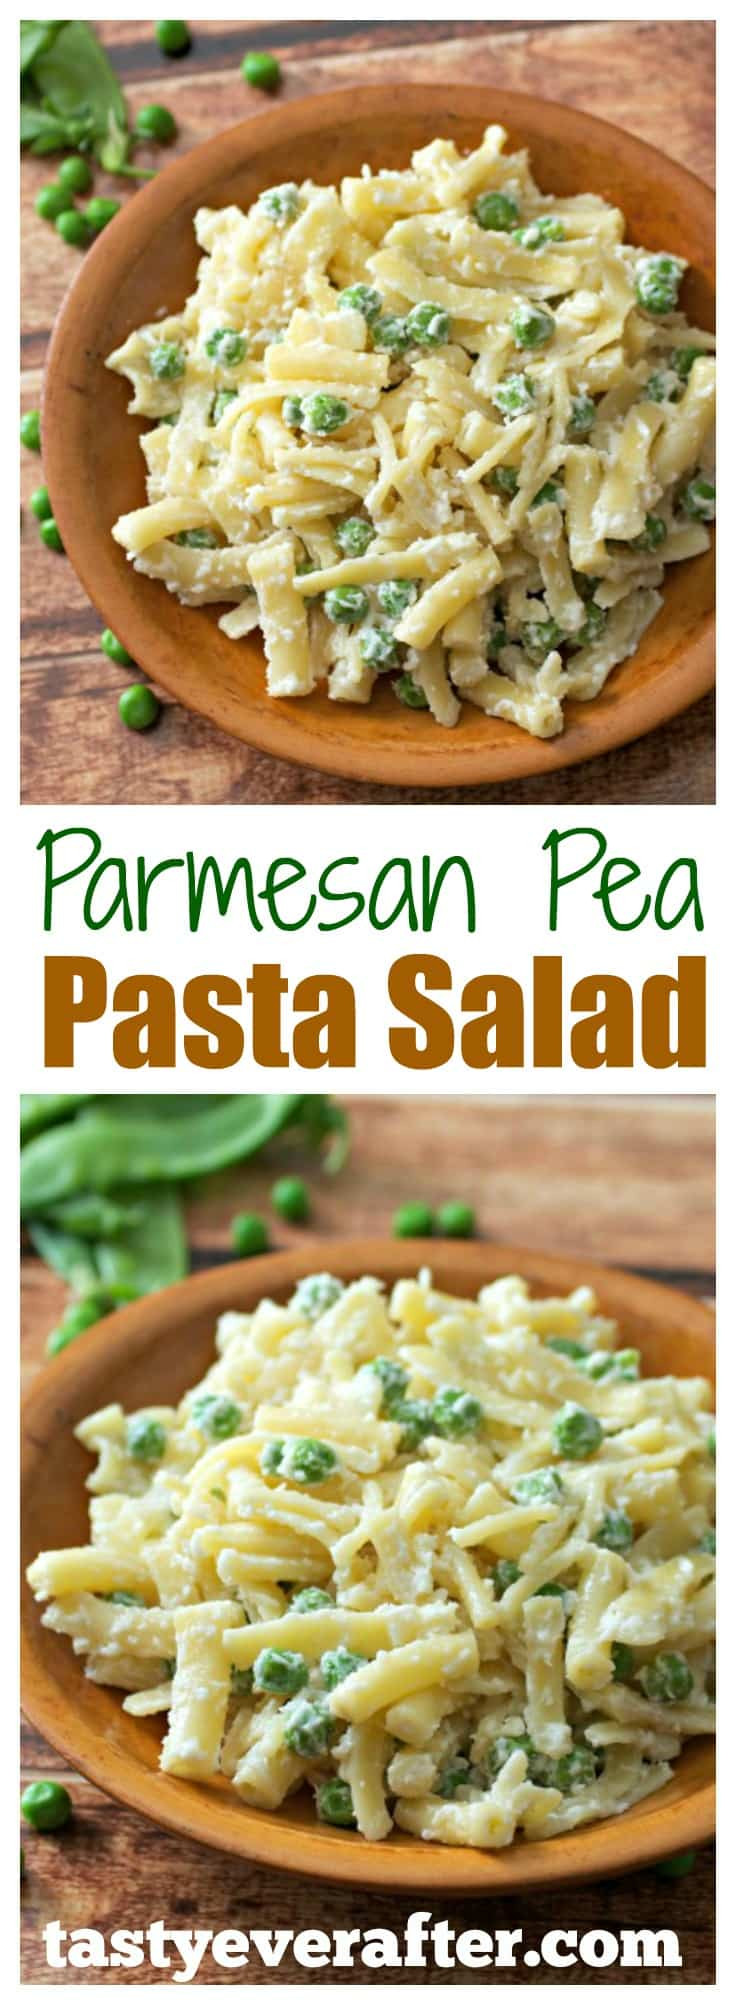 Pasta Salad With Peas
 Parmesan Pea Pasta Salad